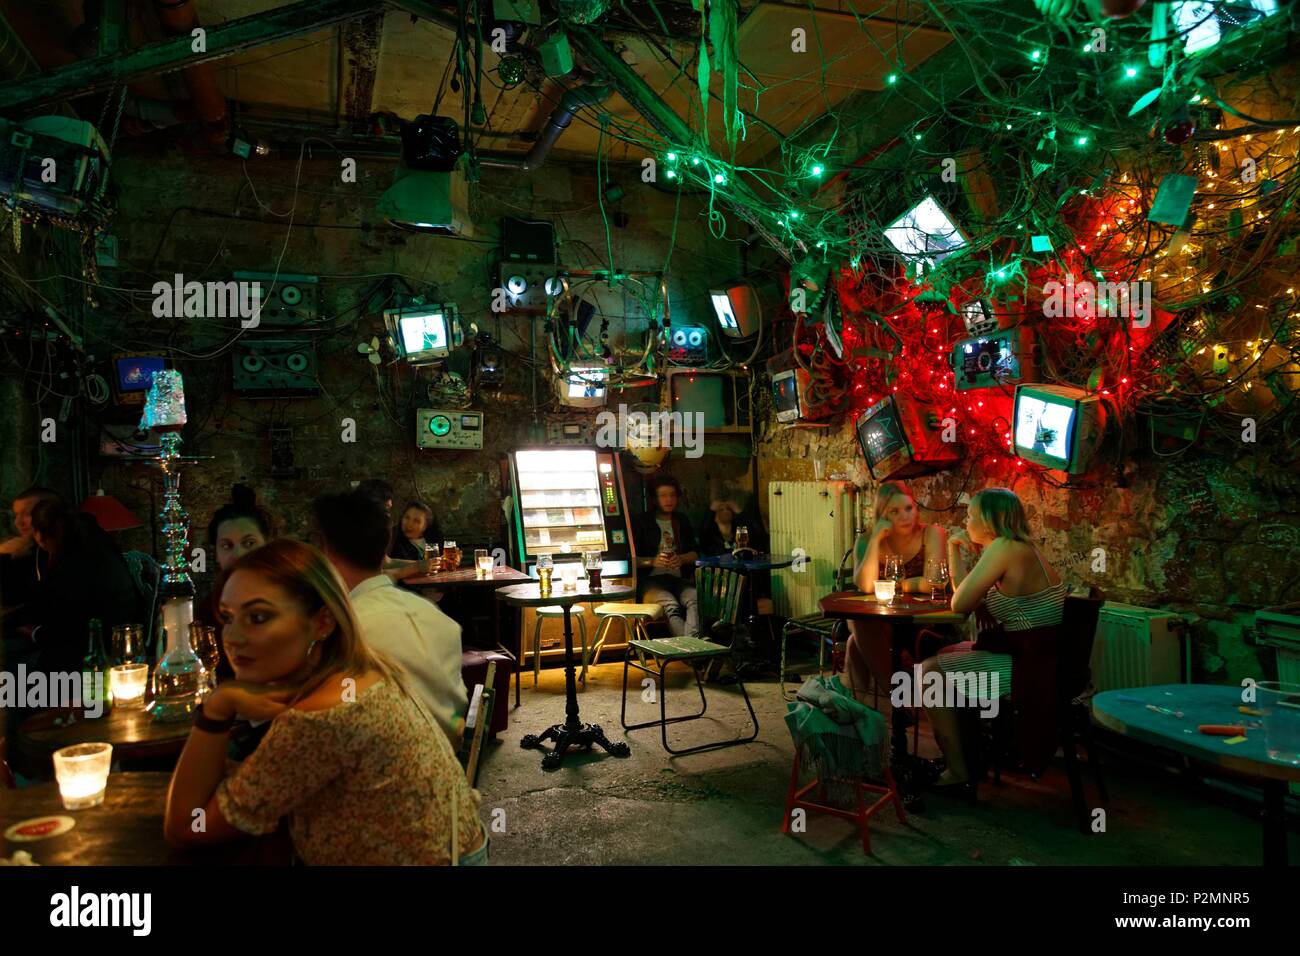 Ruin bar budapest jewish quarter hi-res stock photography and images - Alamy